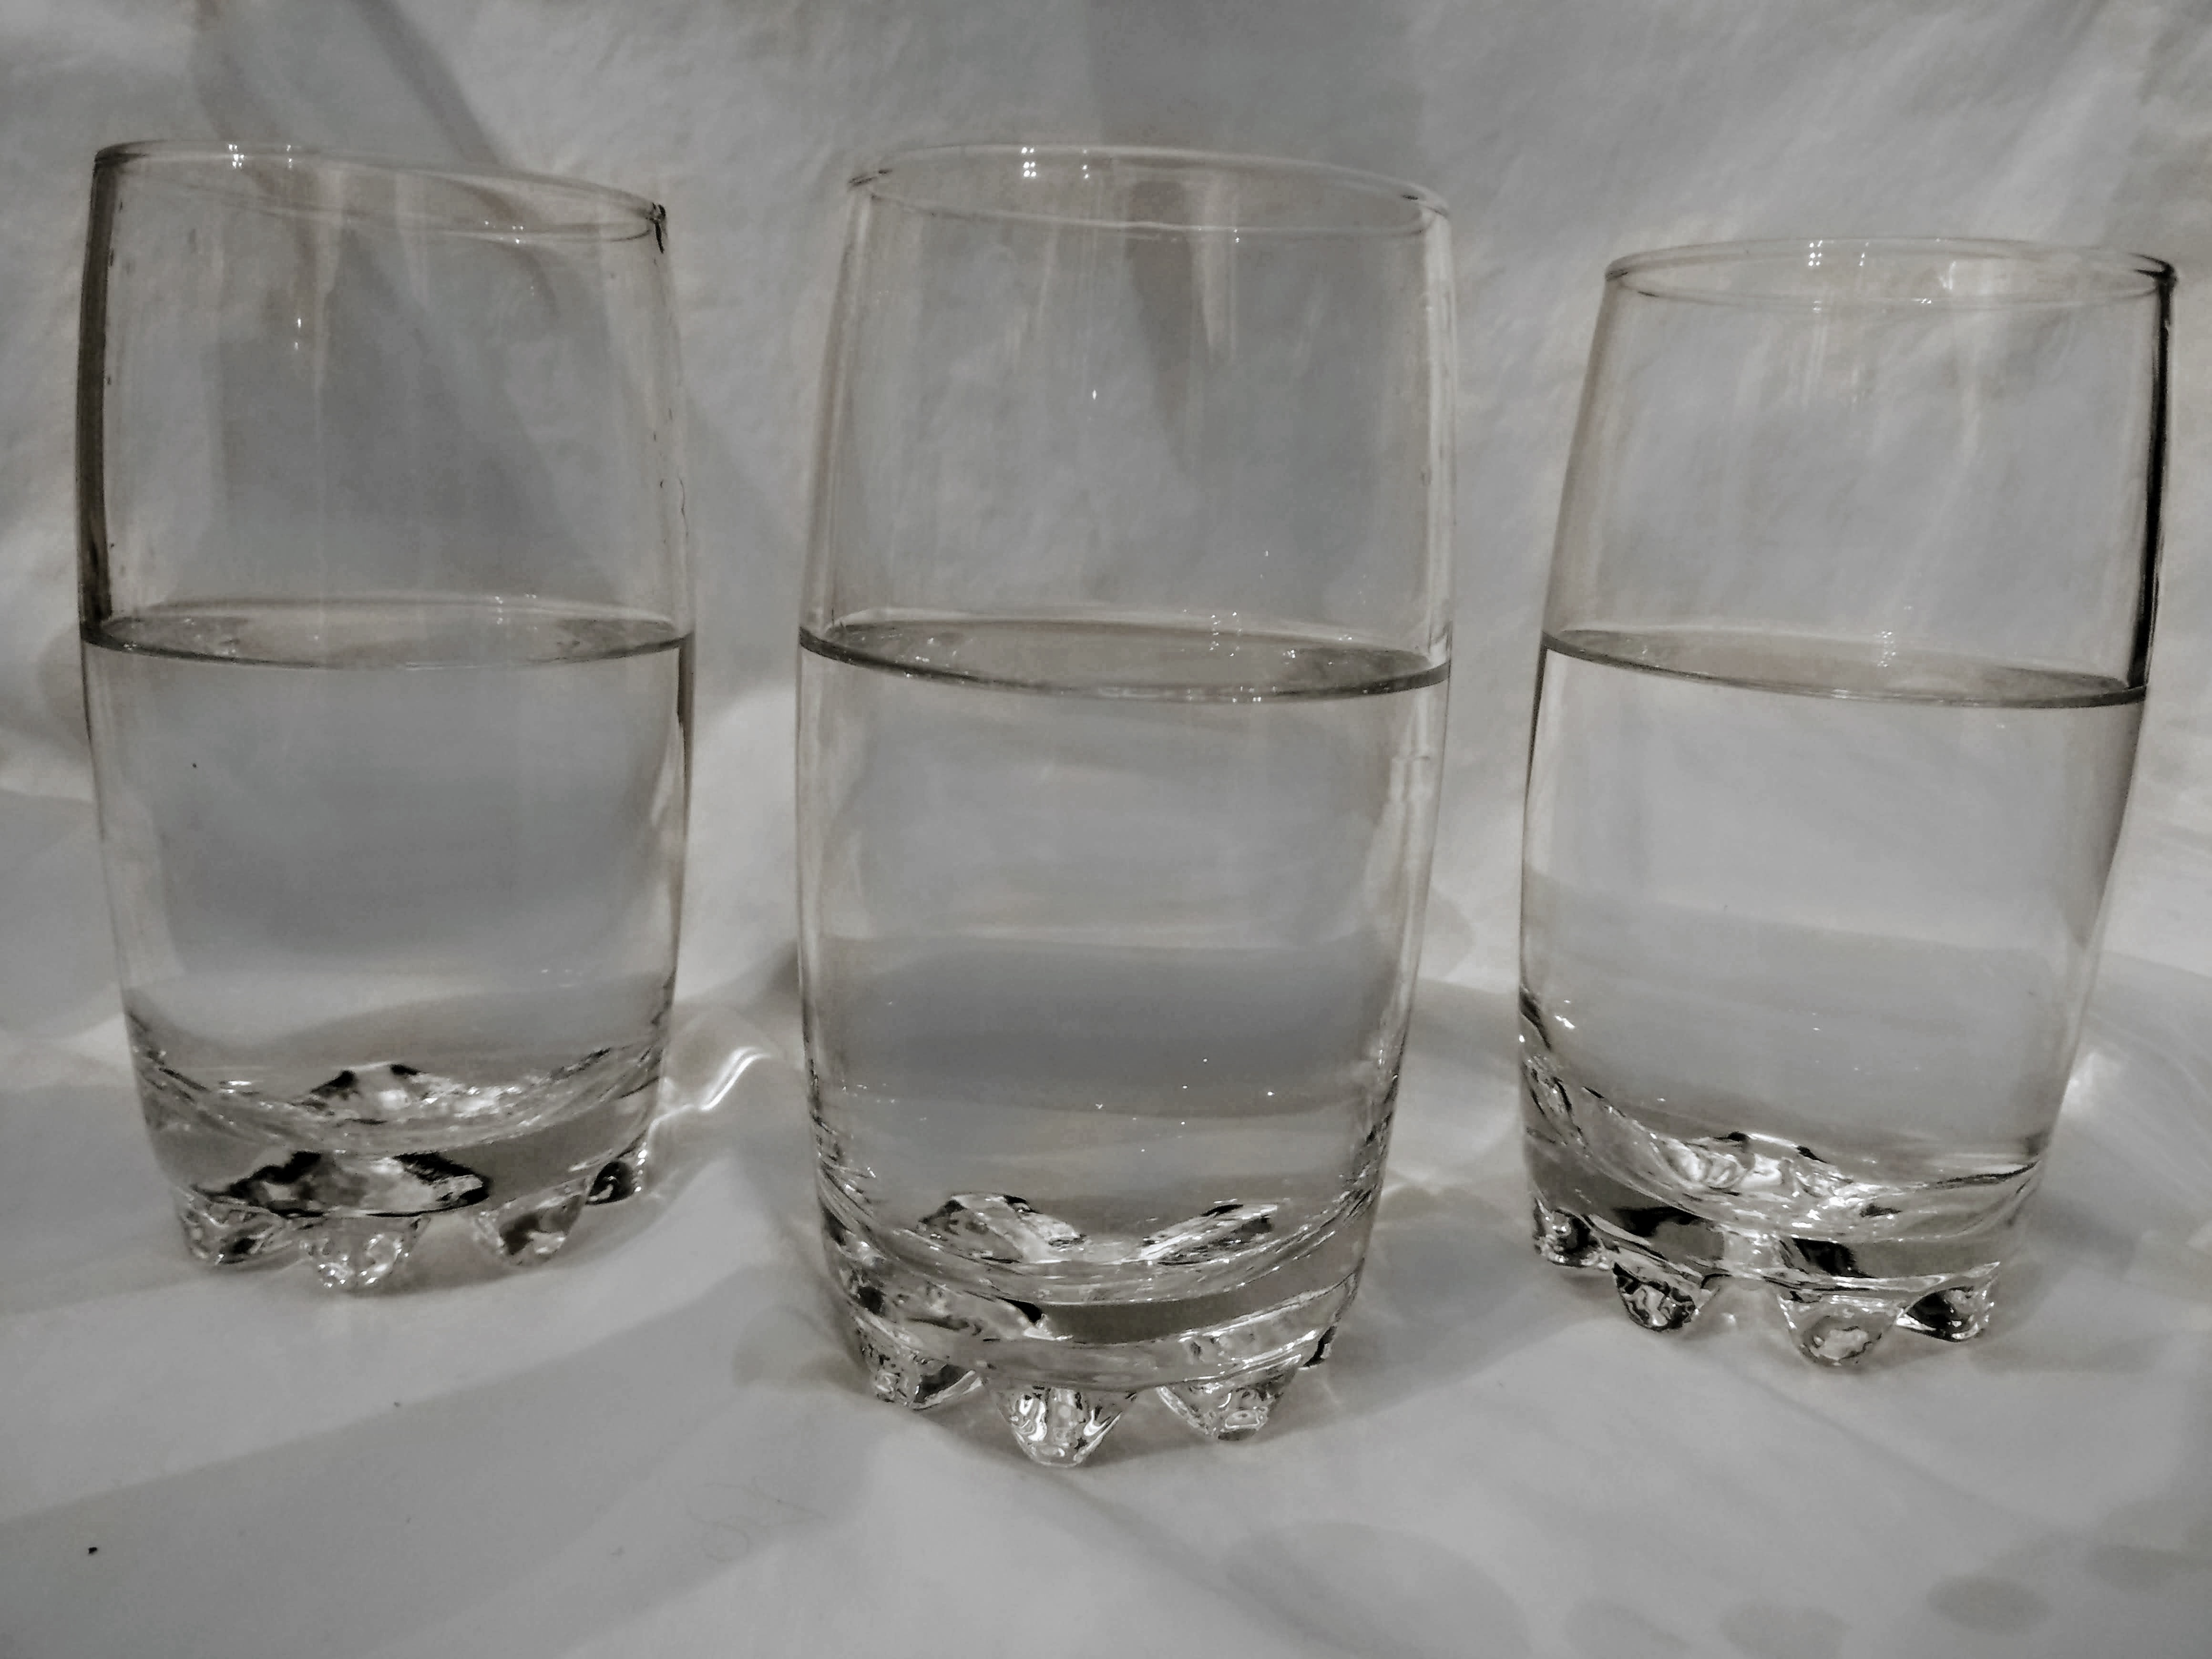 Glasses half-full of water